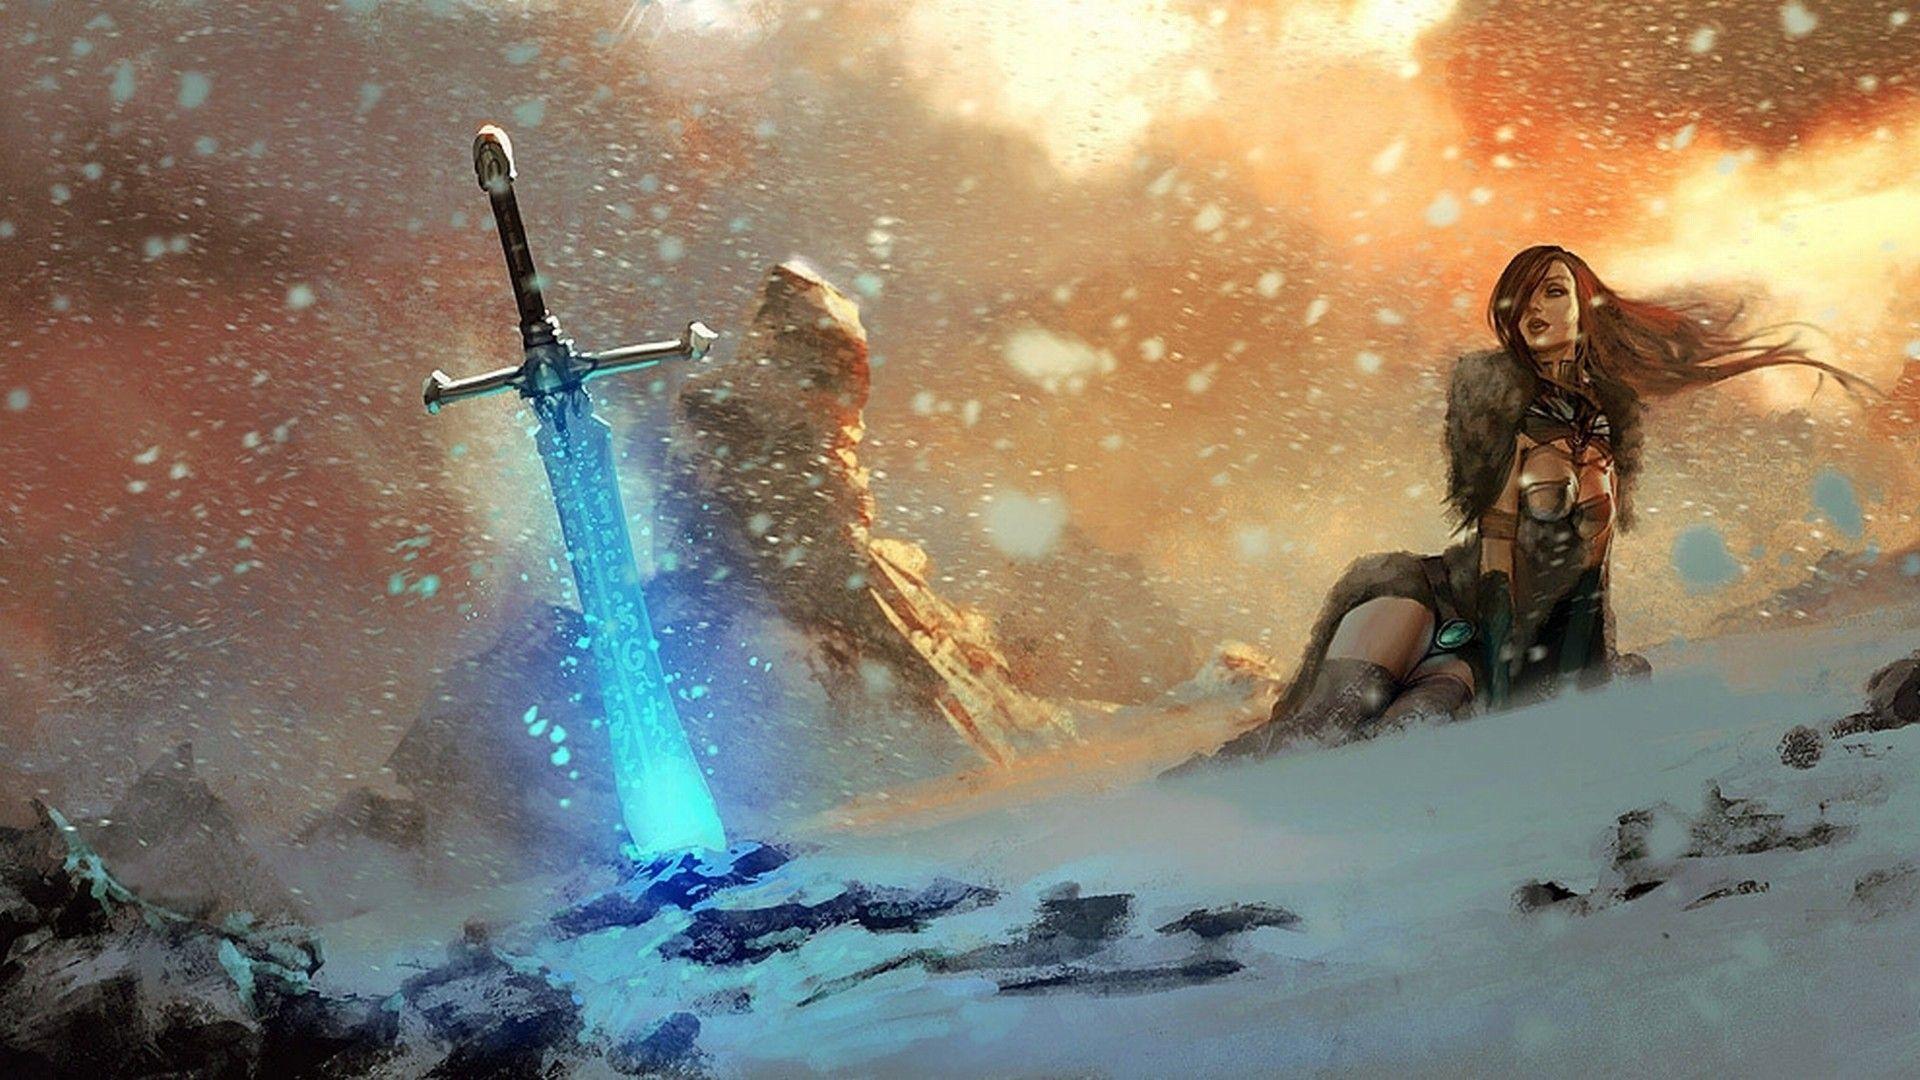 Magic Sword, a game God of War wallpaper and image